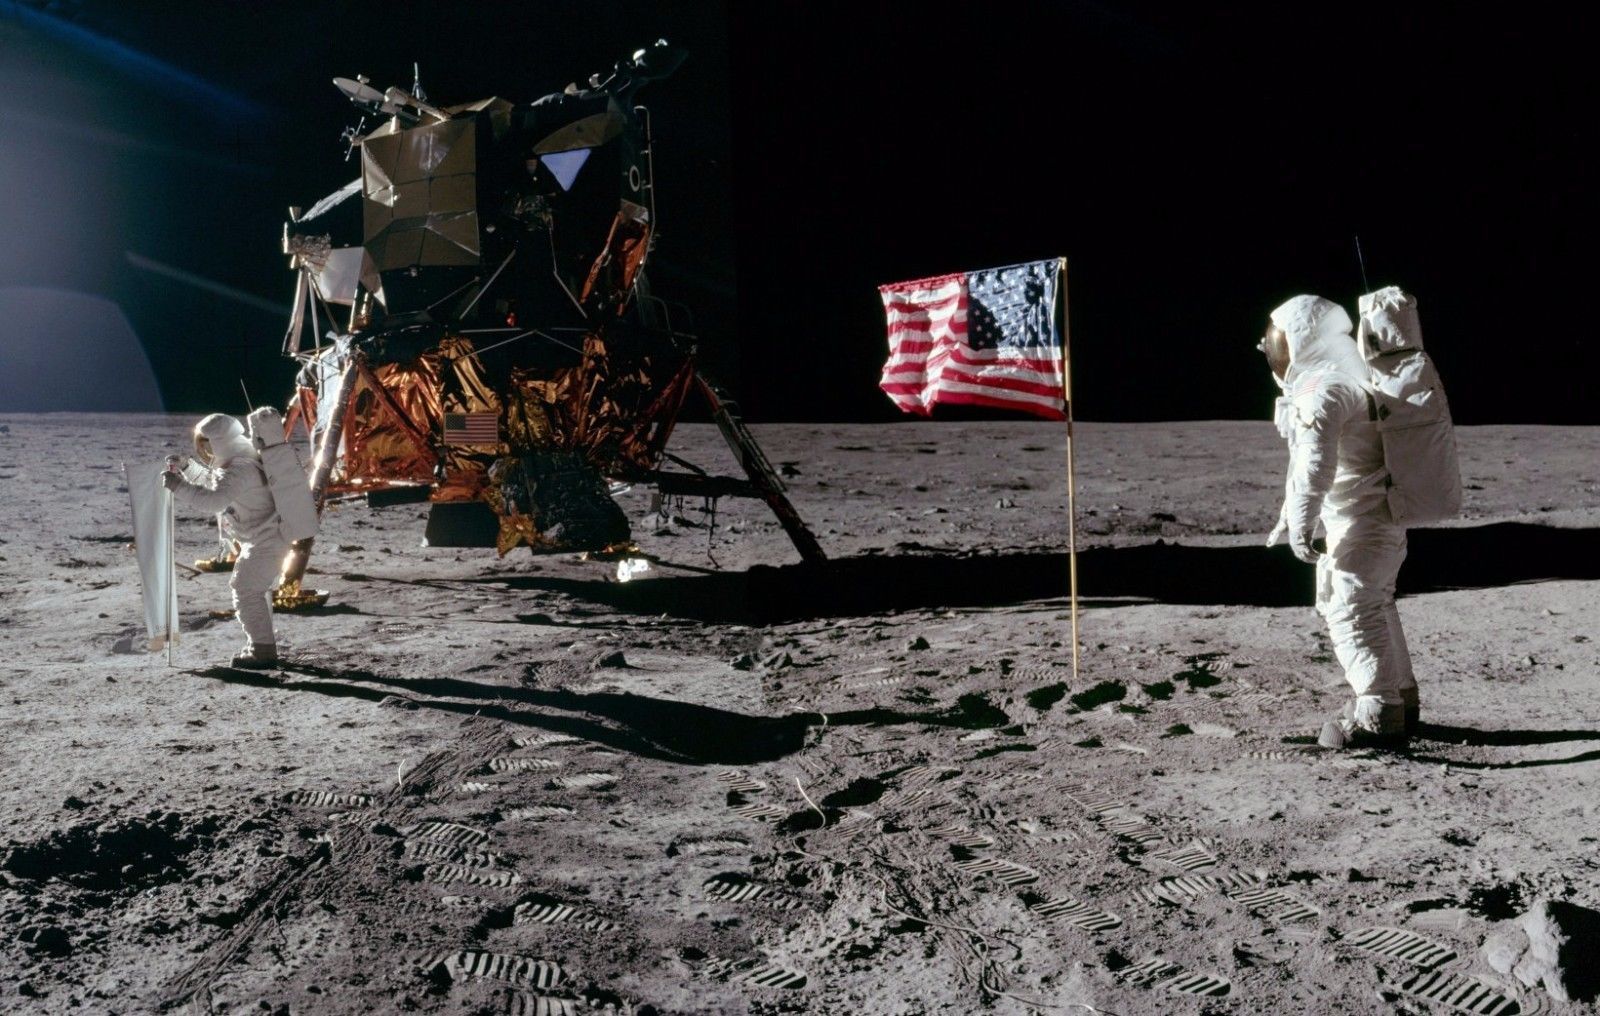 Фотографии с миссий аполлон